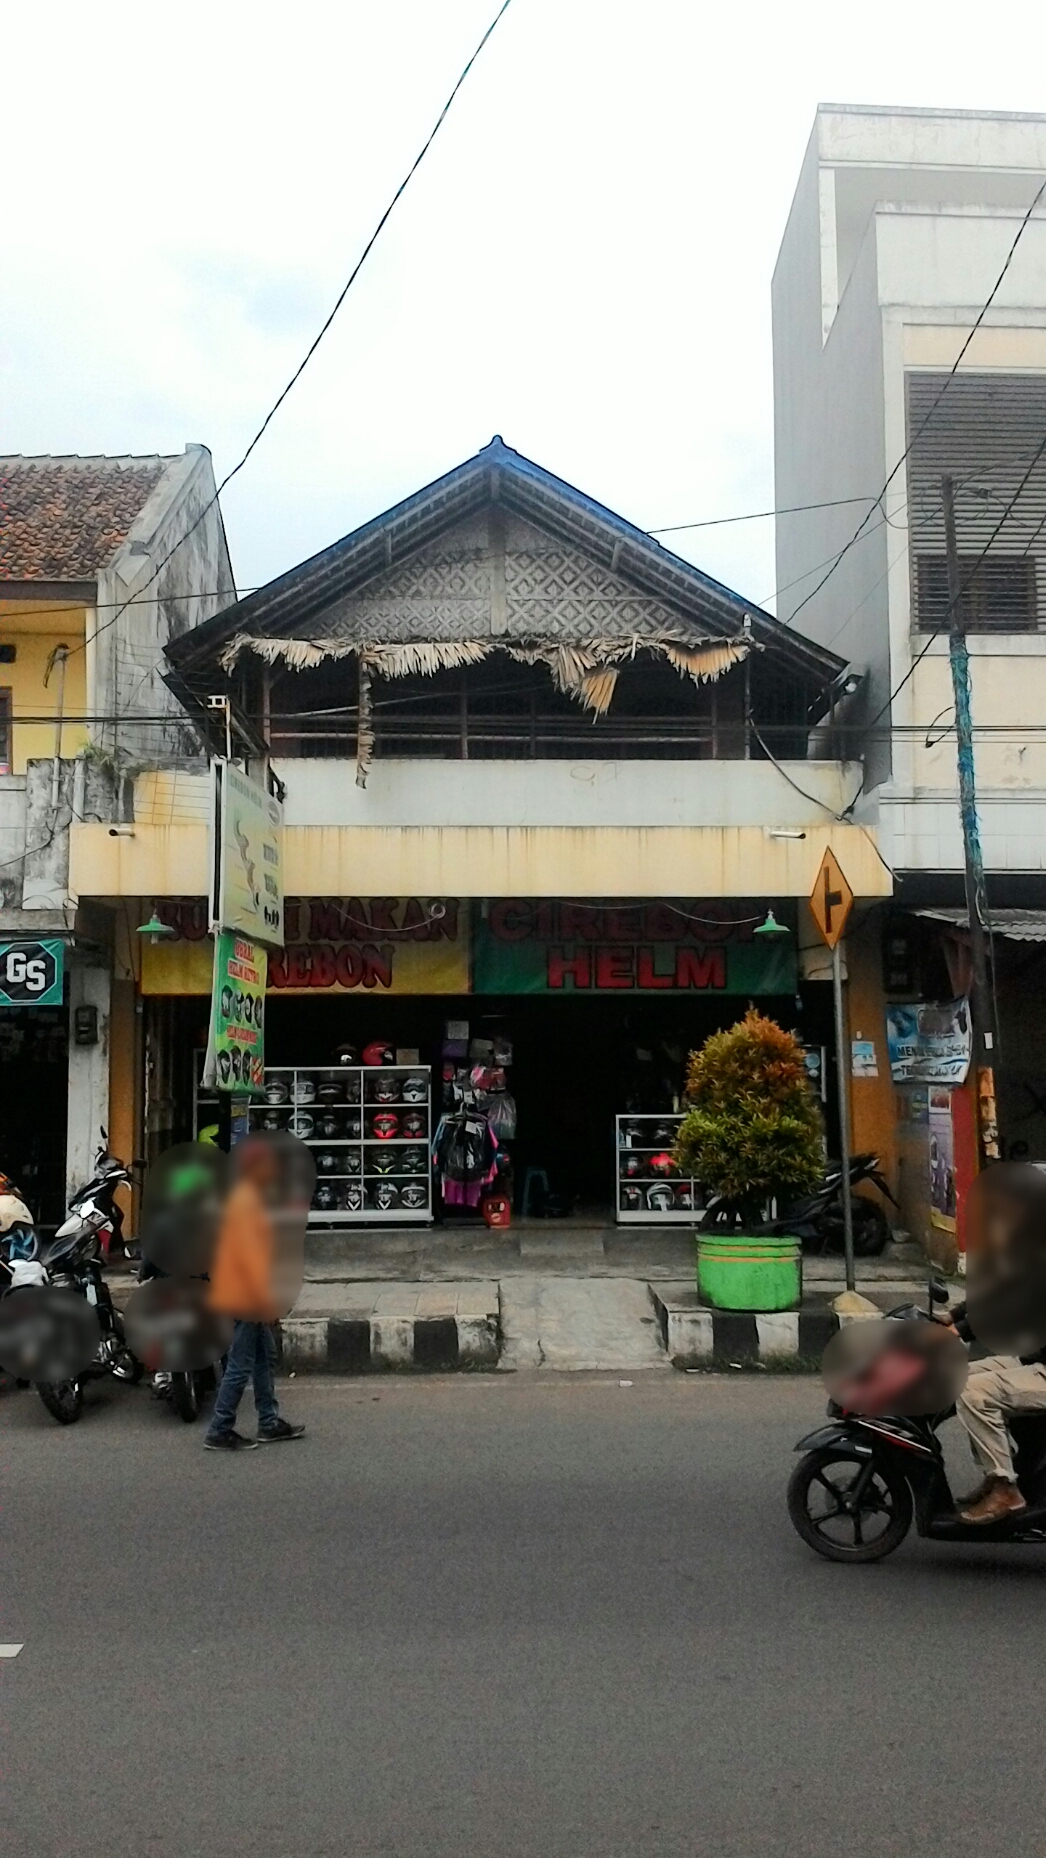 Cirebon Helm